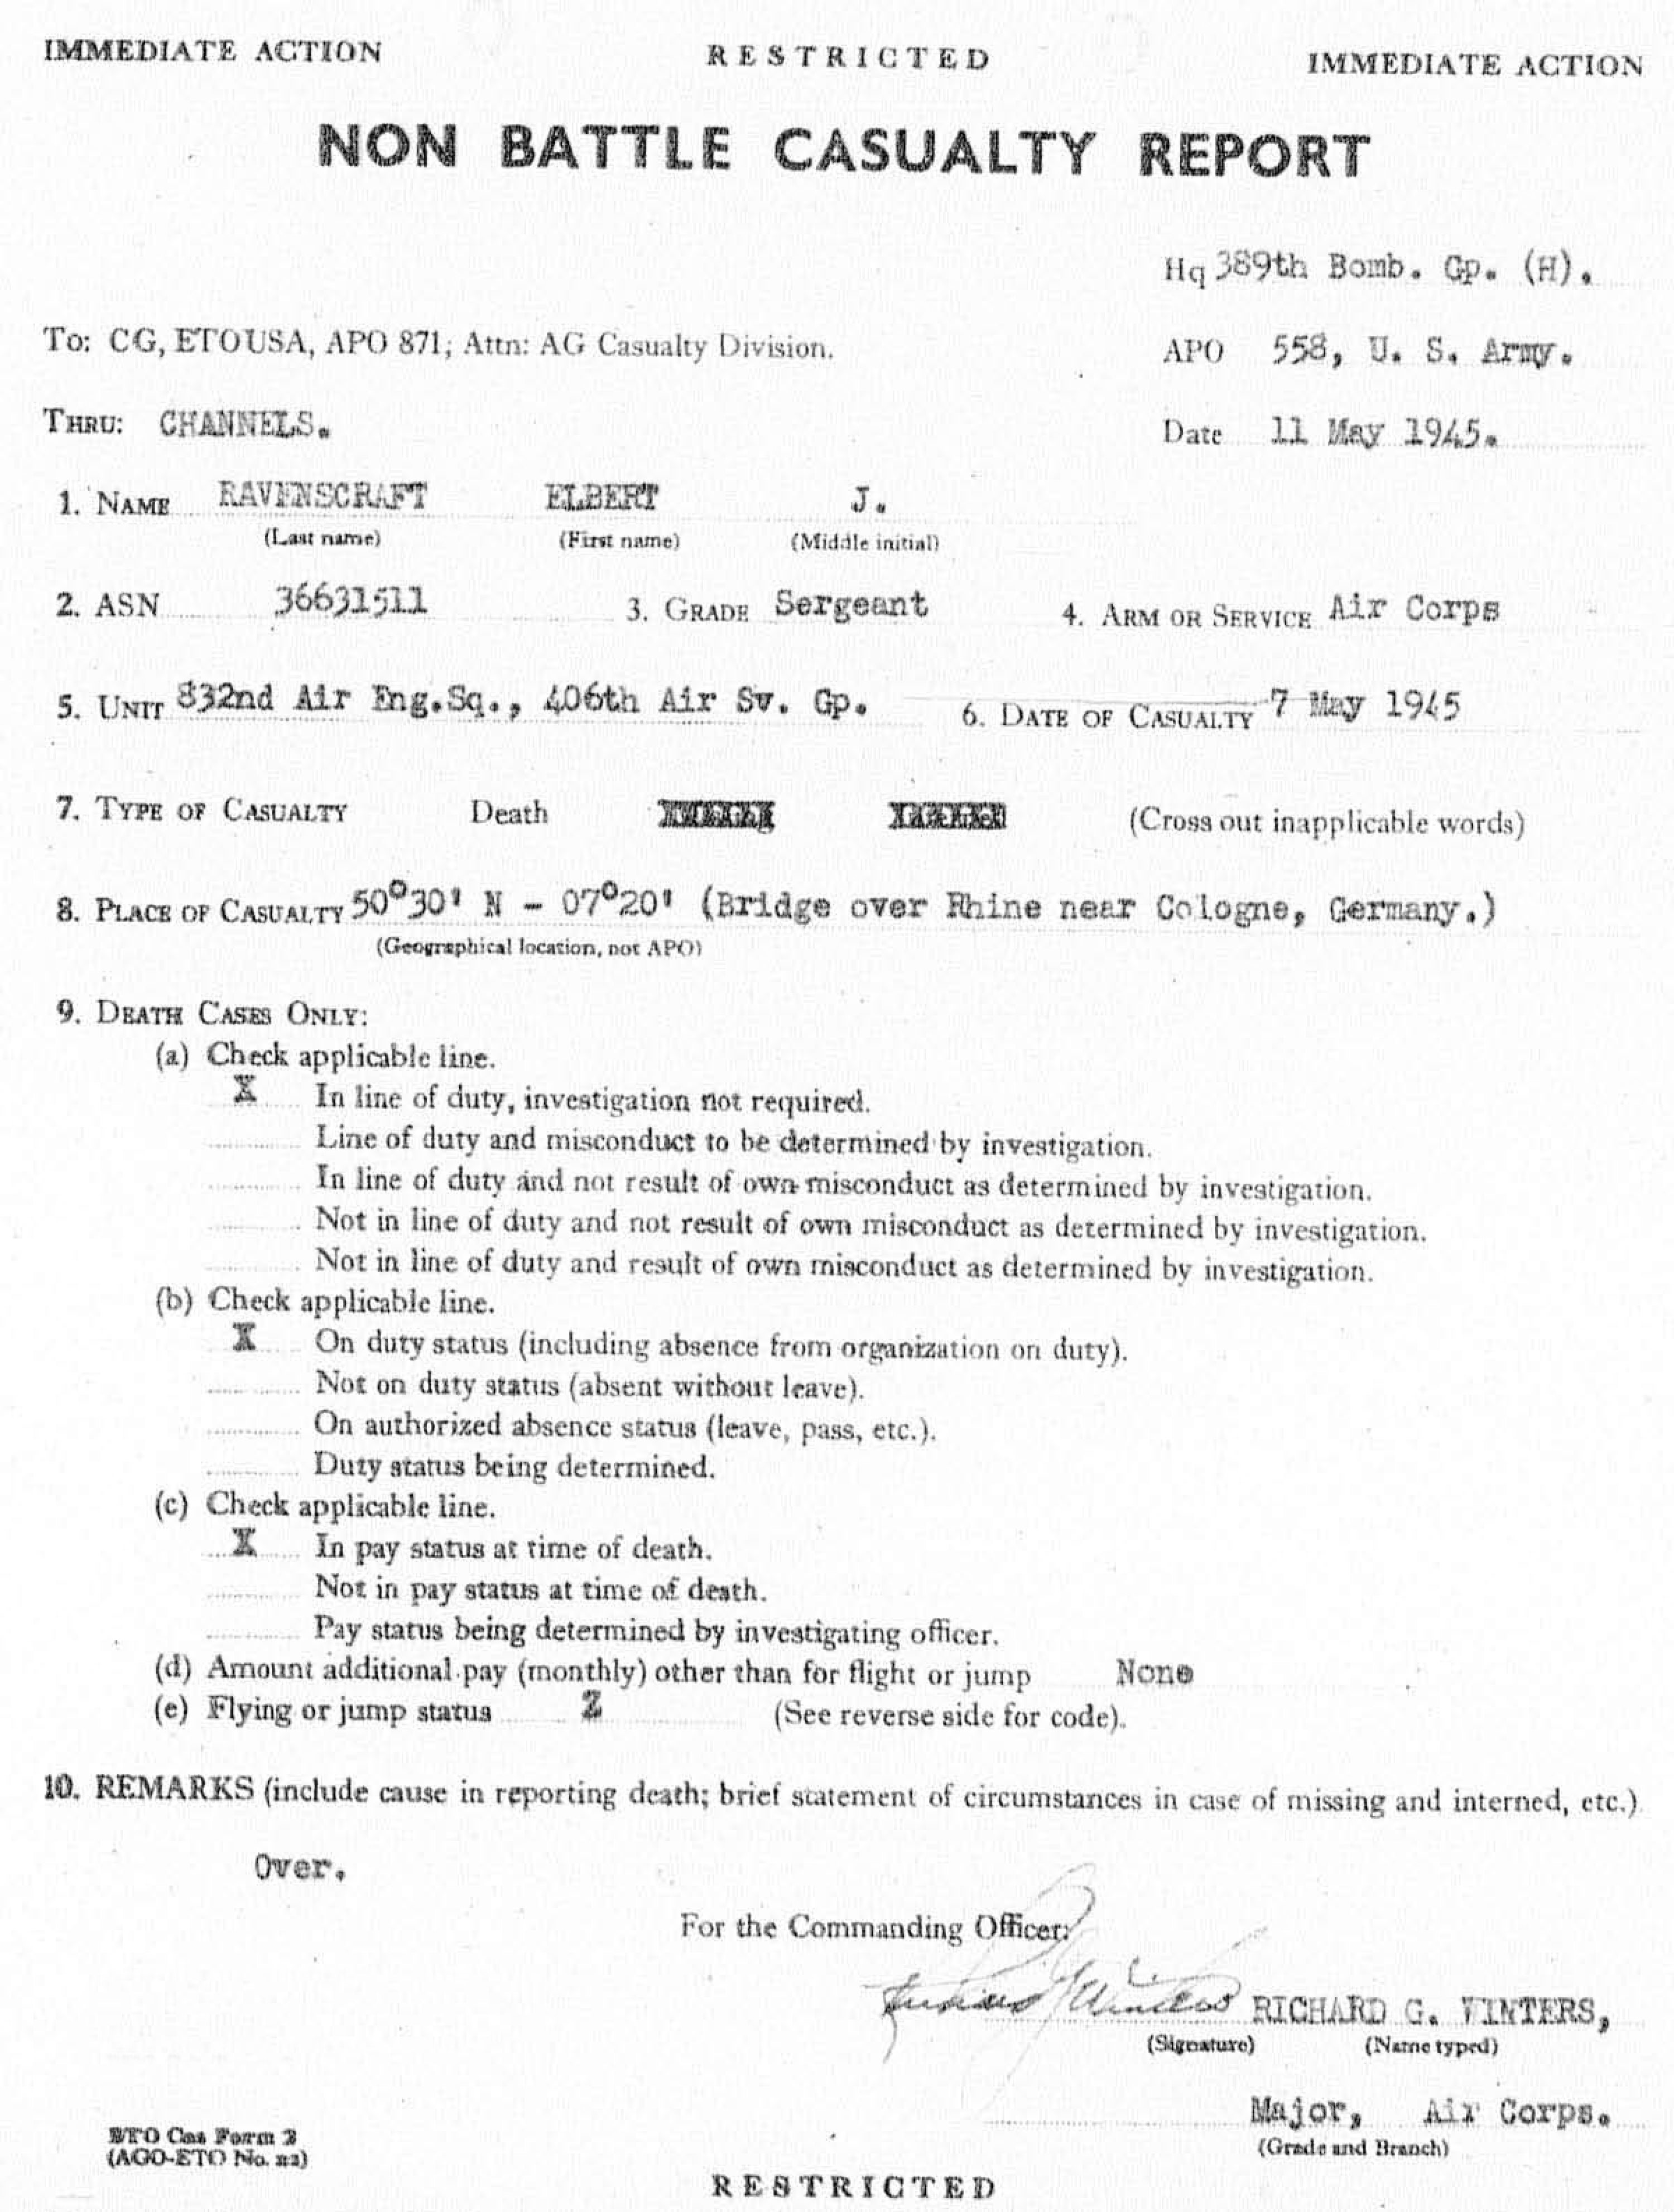 Elbert Ravenscraft - Non Battle Casualty Report - May 1945